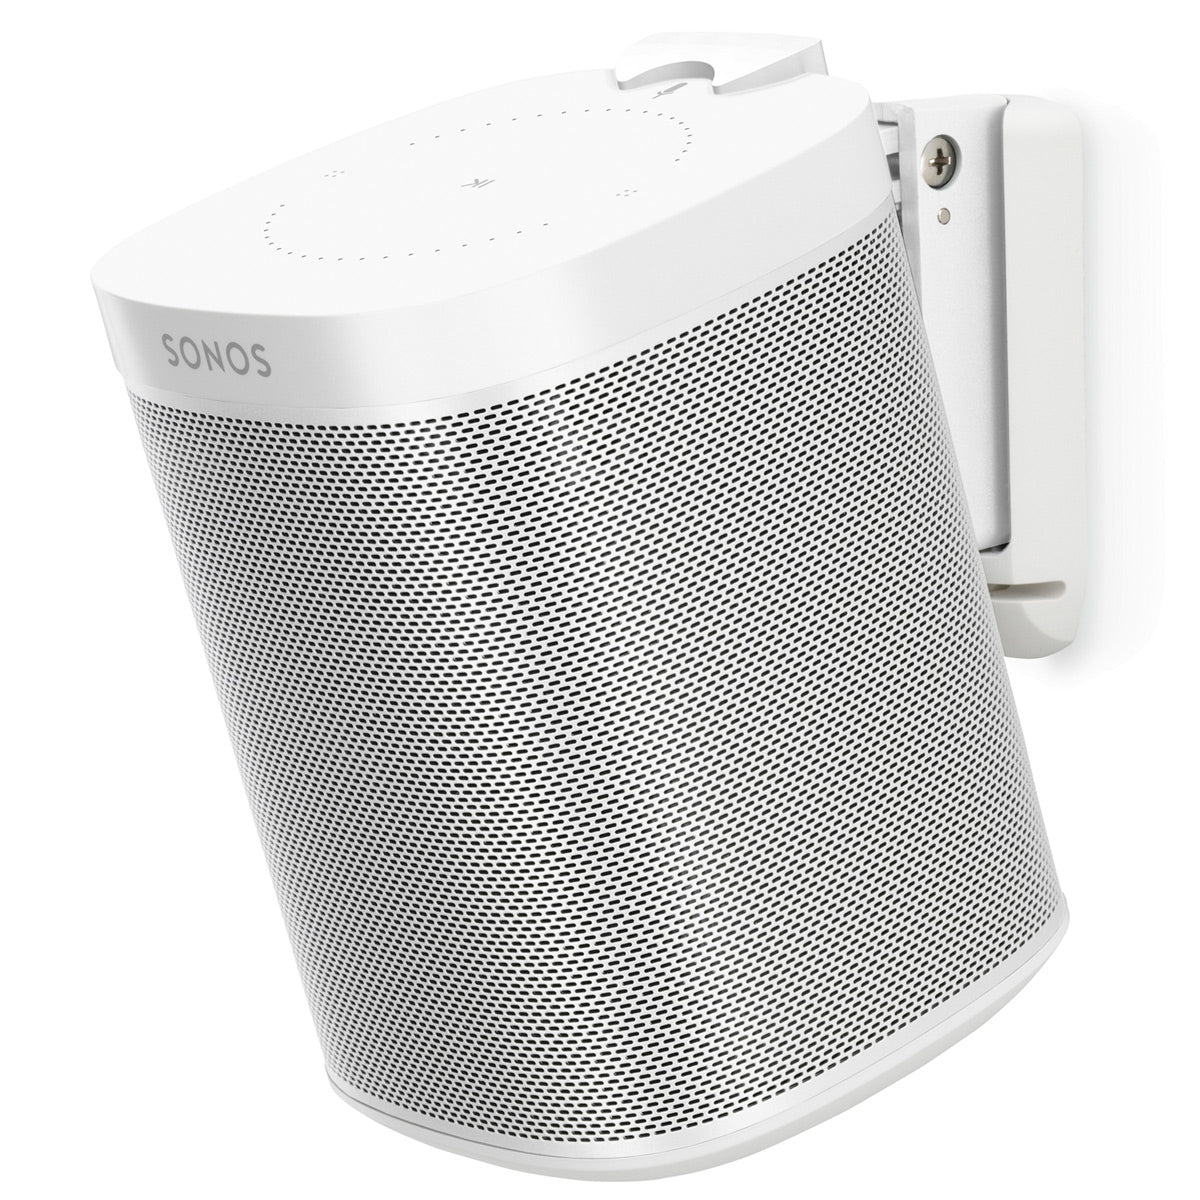 Flexson Wall Mount for Sonos One - Each (White)